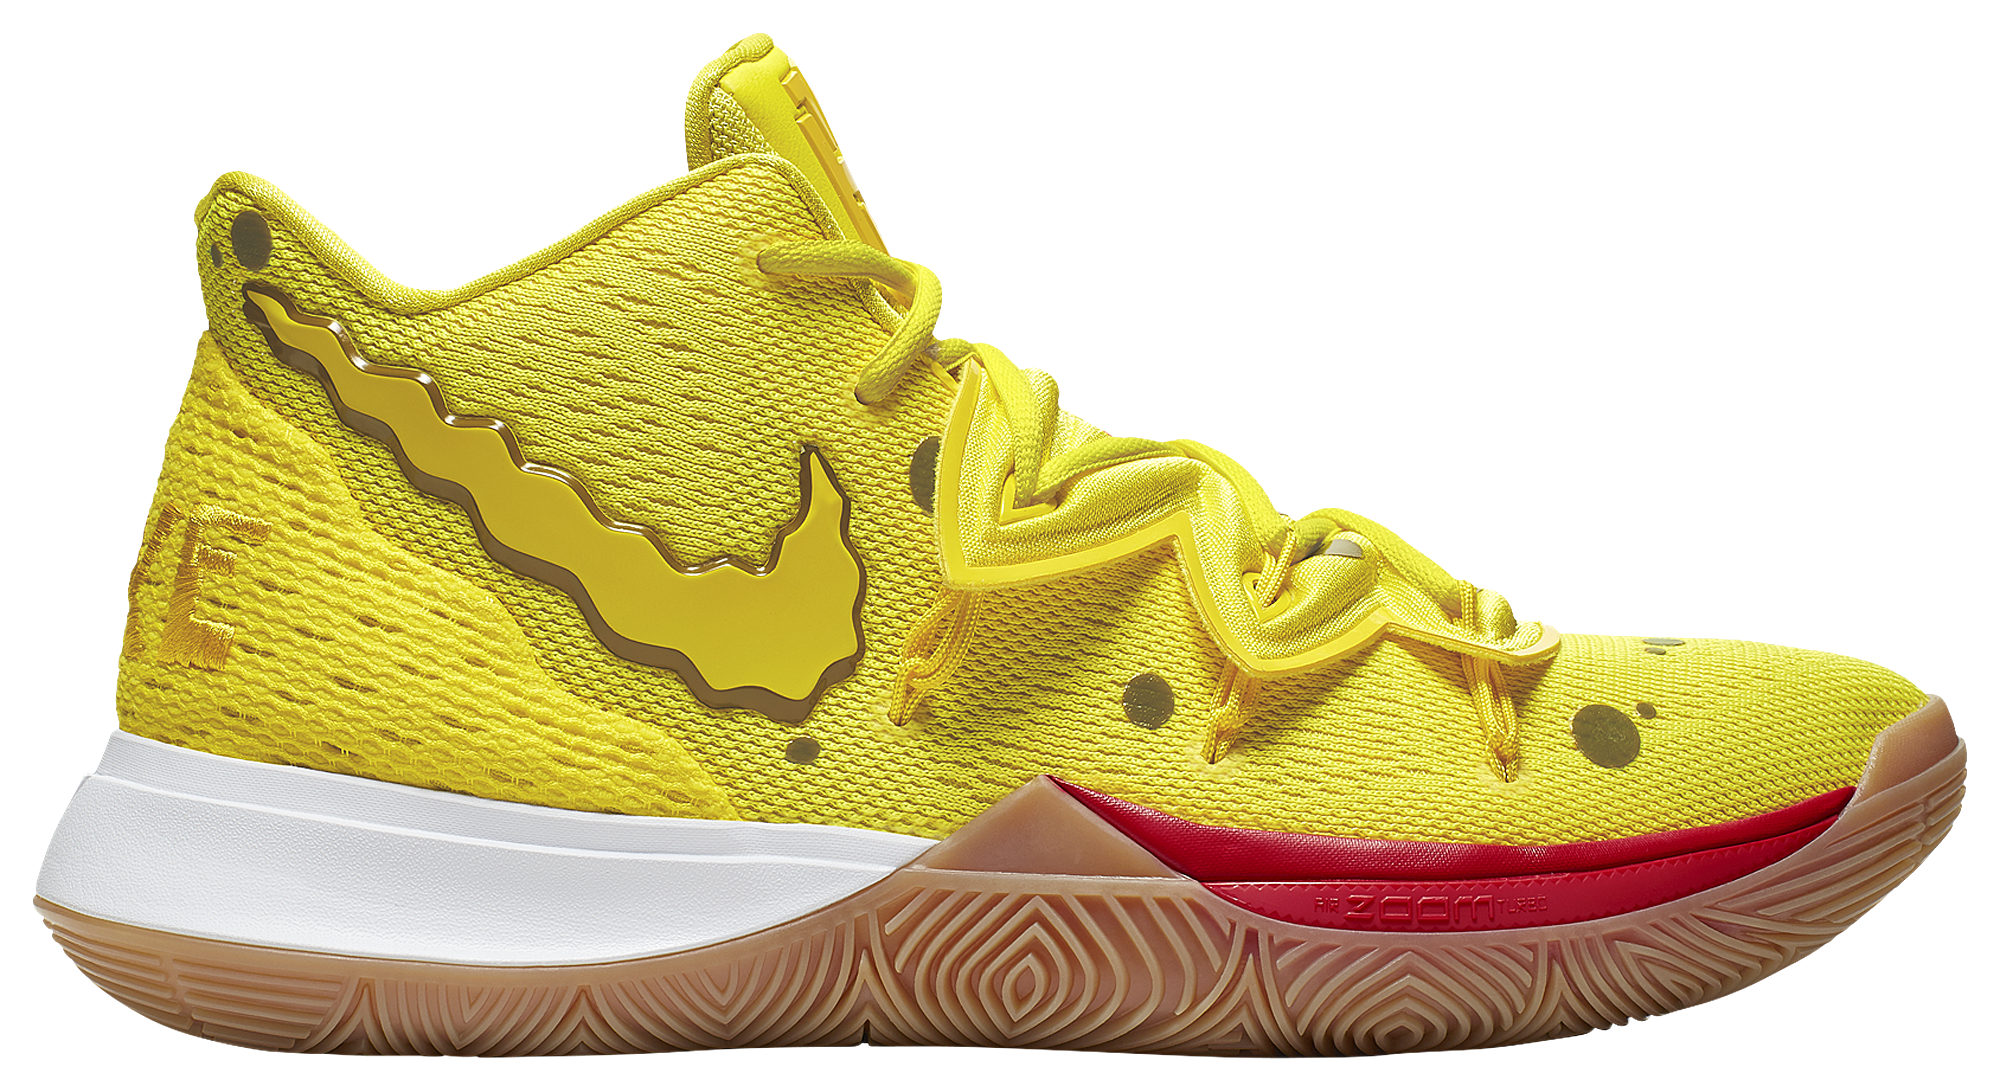 Nike Kyrie 5 Spongebob Pineapple GS Limited Edition 3.5Y